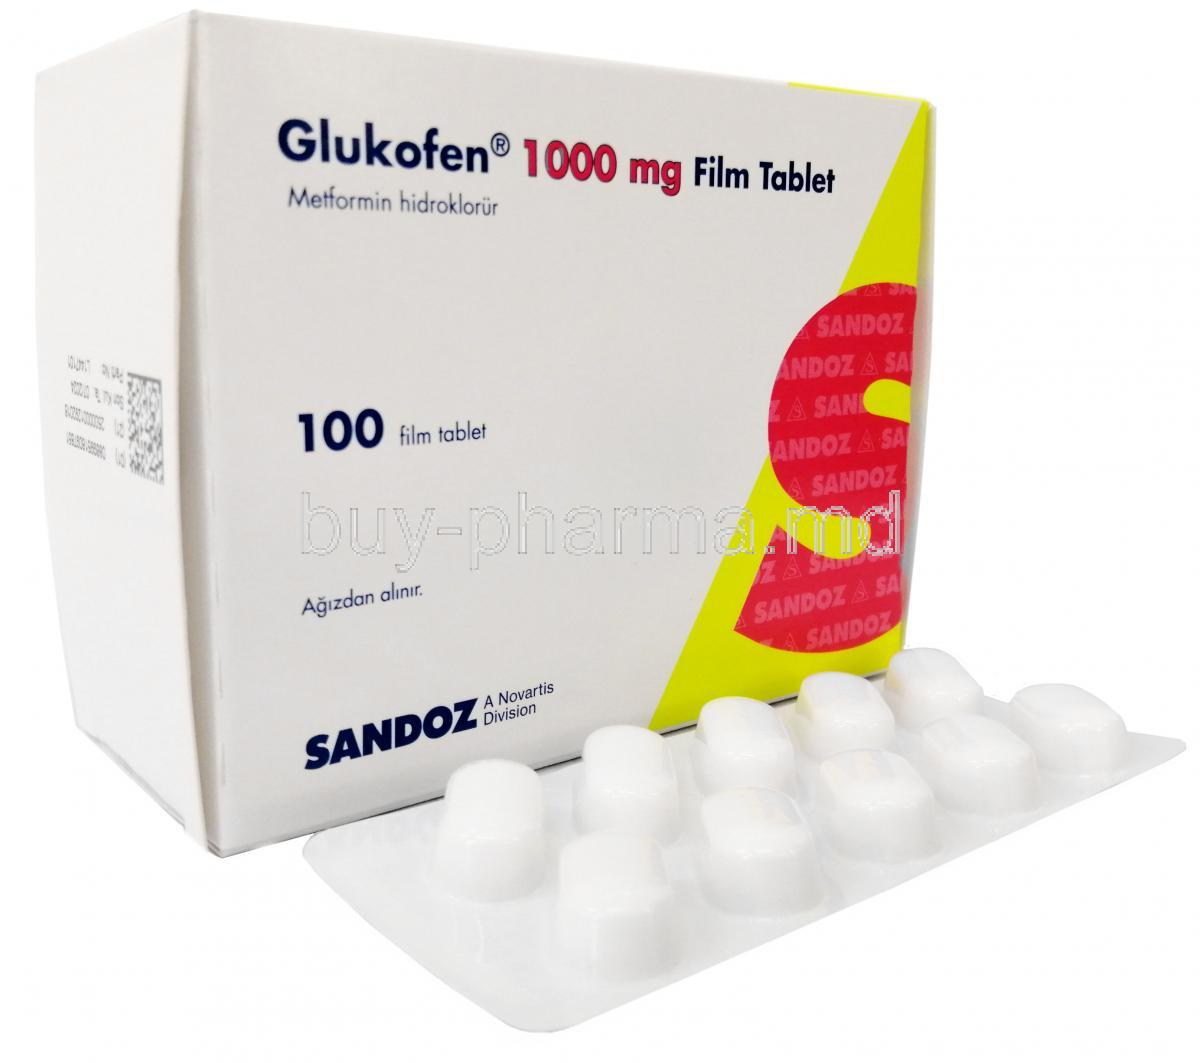 Glukofen, Metformin 1,000 mg, Sandoz, Box, Blisterpack